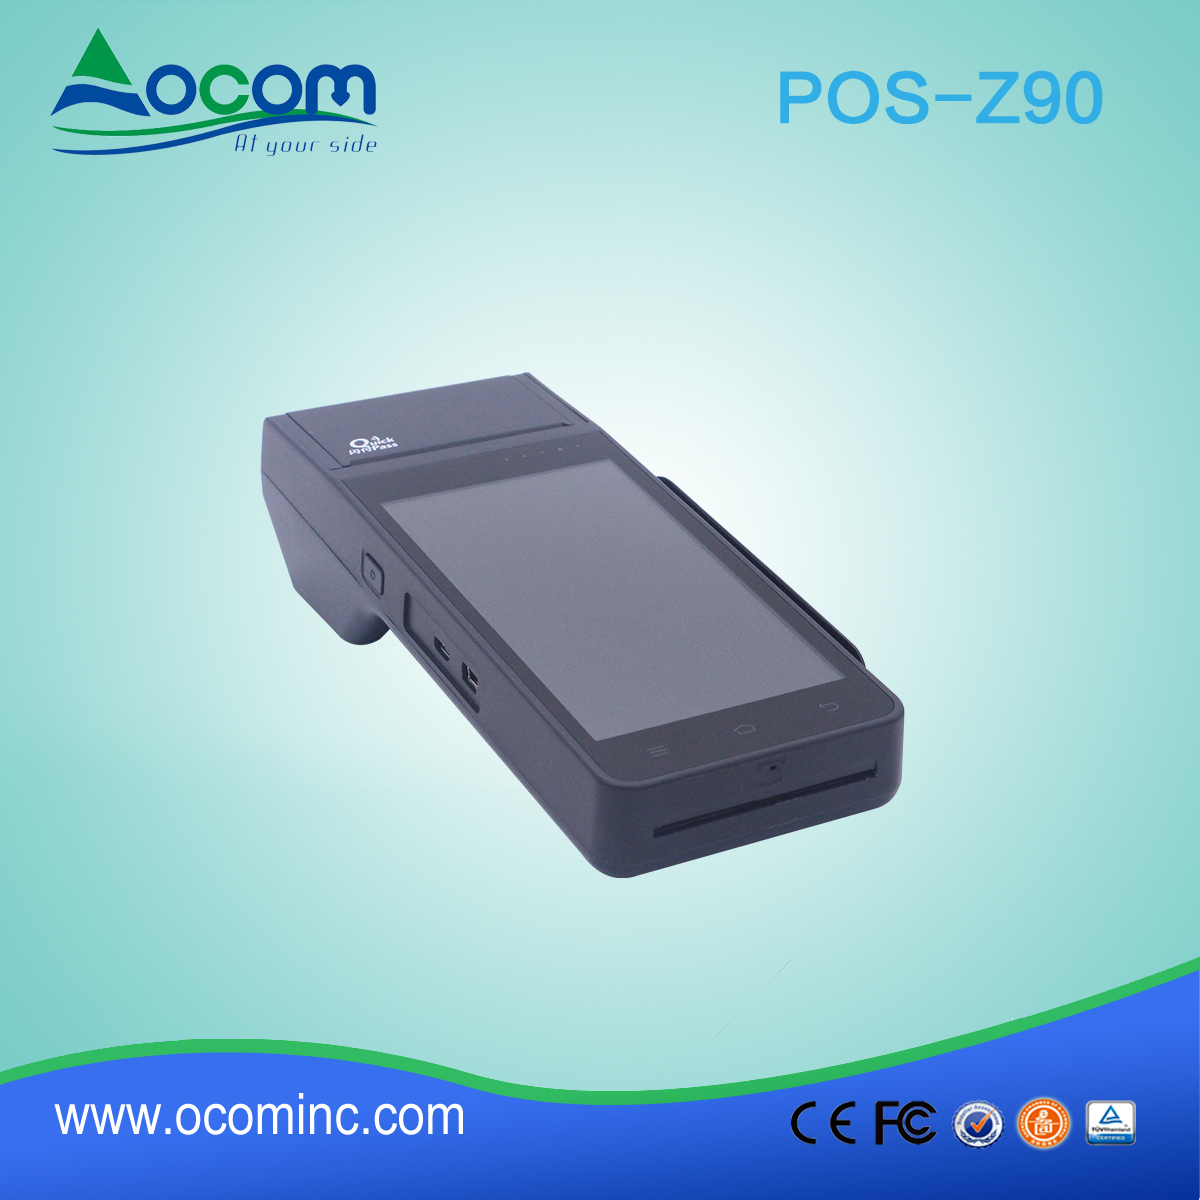 (POS-Z90) Χαμηλού κόστους Android φορητό τερματικό POS θερμικό εκτυπωτή